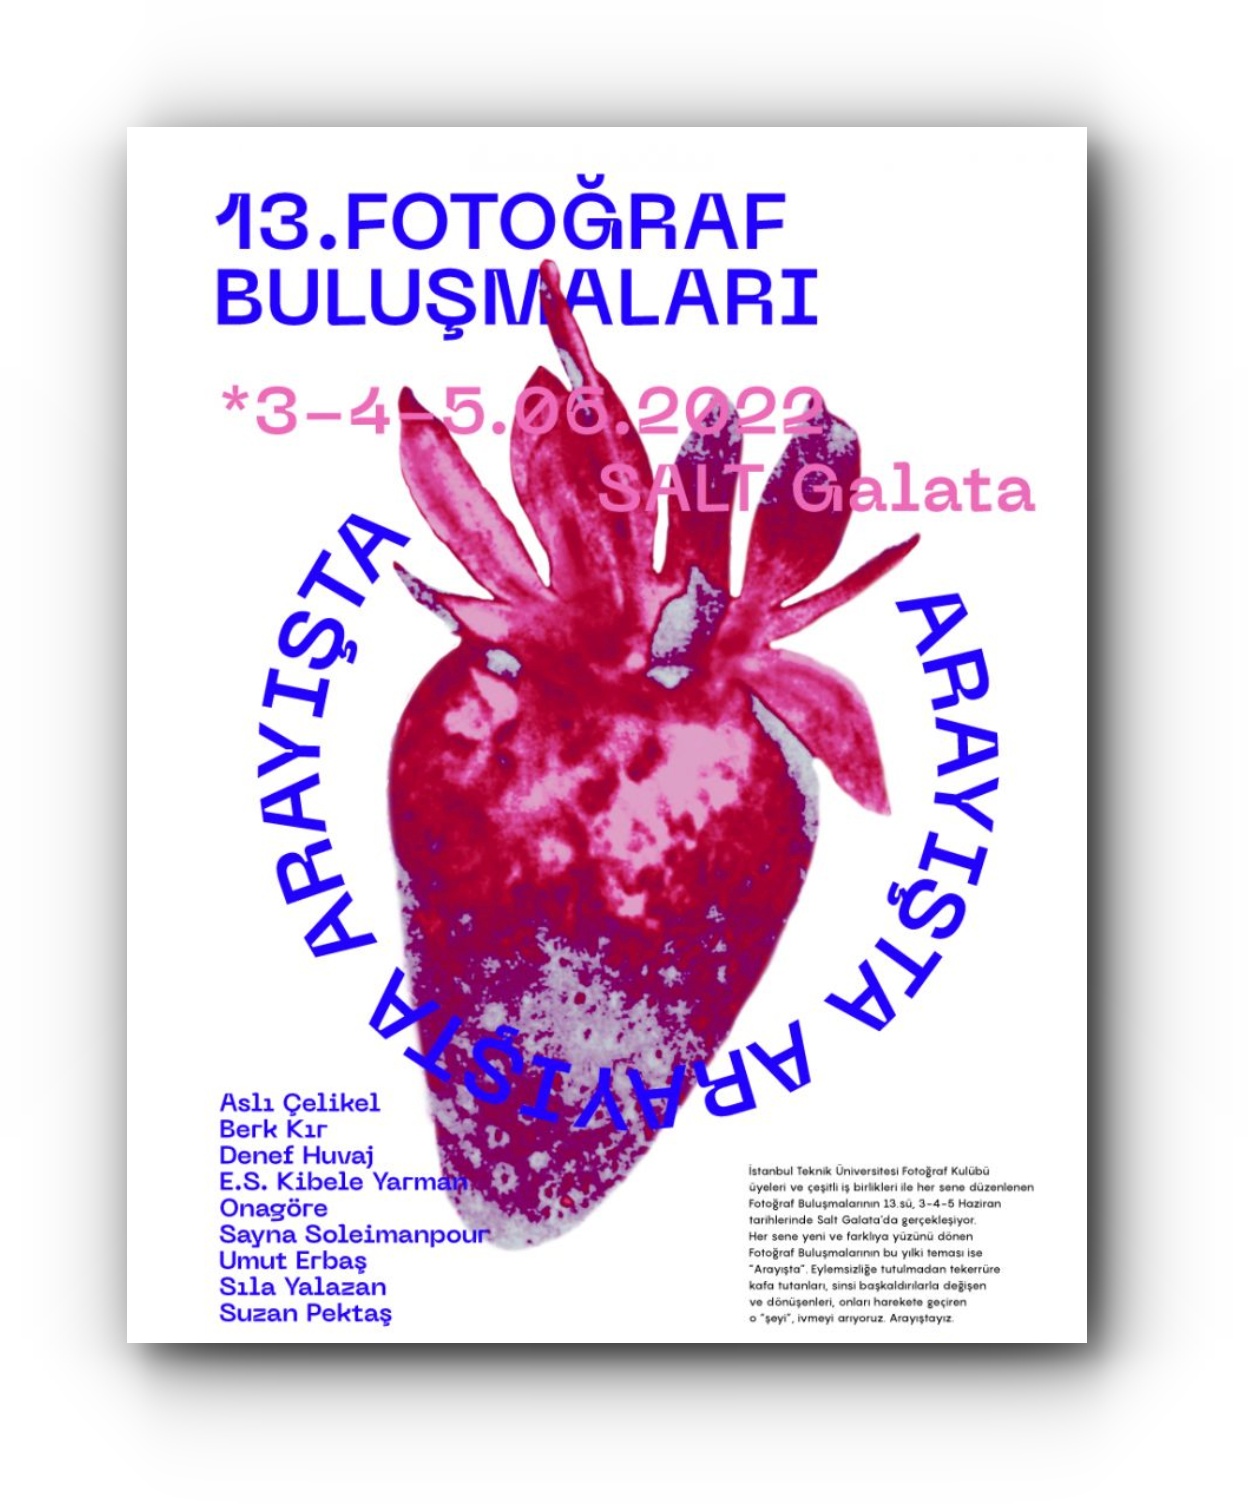 İTU Photography Club 13th Photography Meetings at Salt Galata. June 3-5, 2022